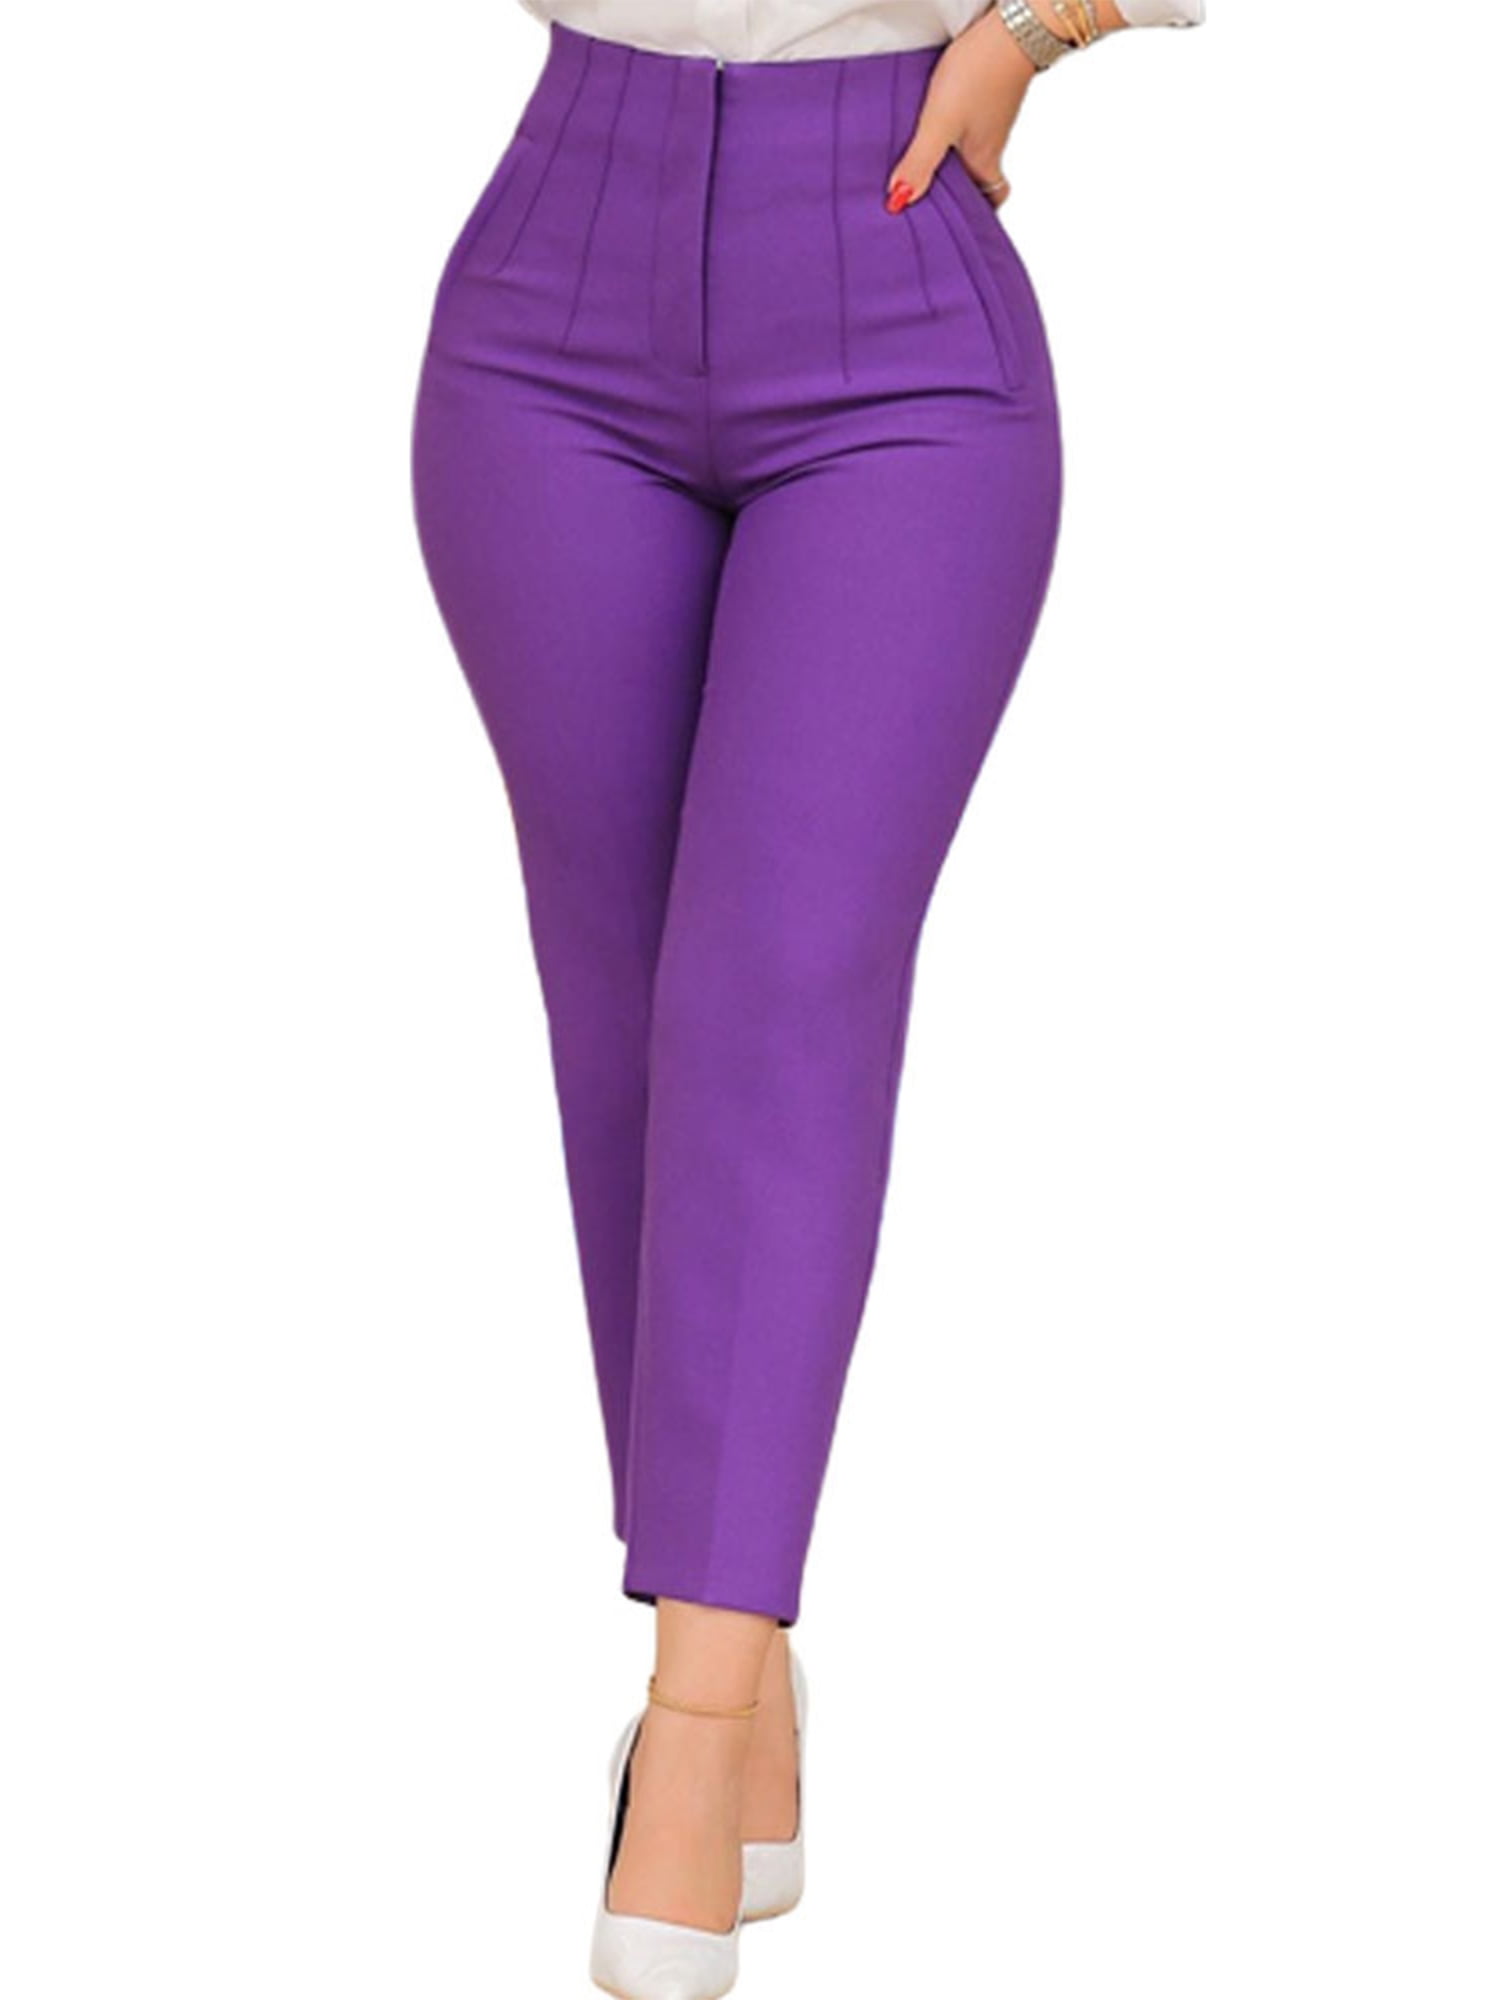 Grianlook Womens Work Dress Pants Office Business Casual Slacks Ladies  Regular Straight Leg Trousers with Pockets Purple L